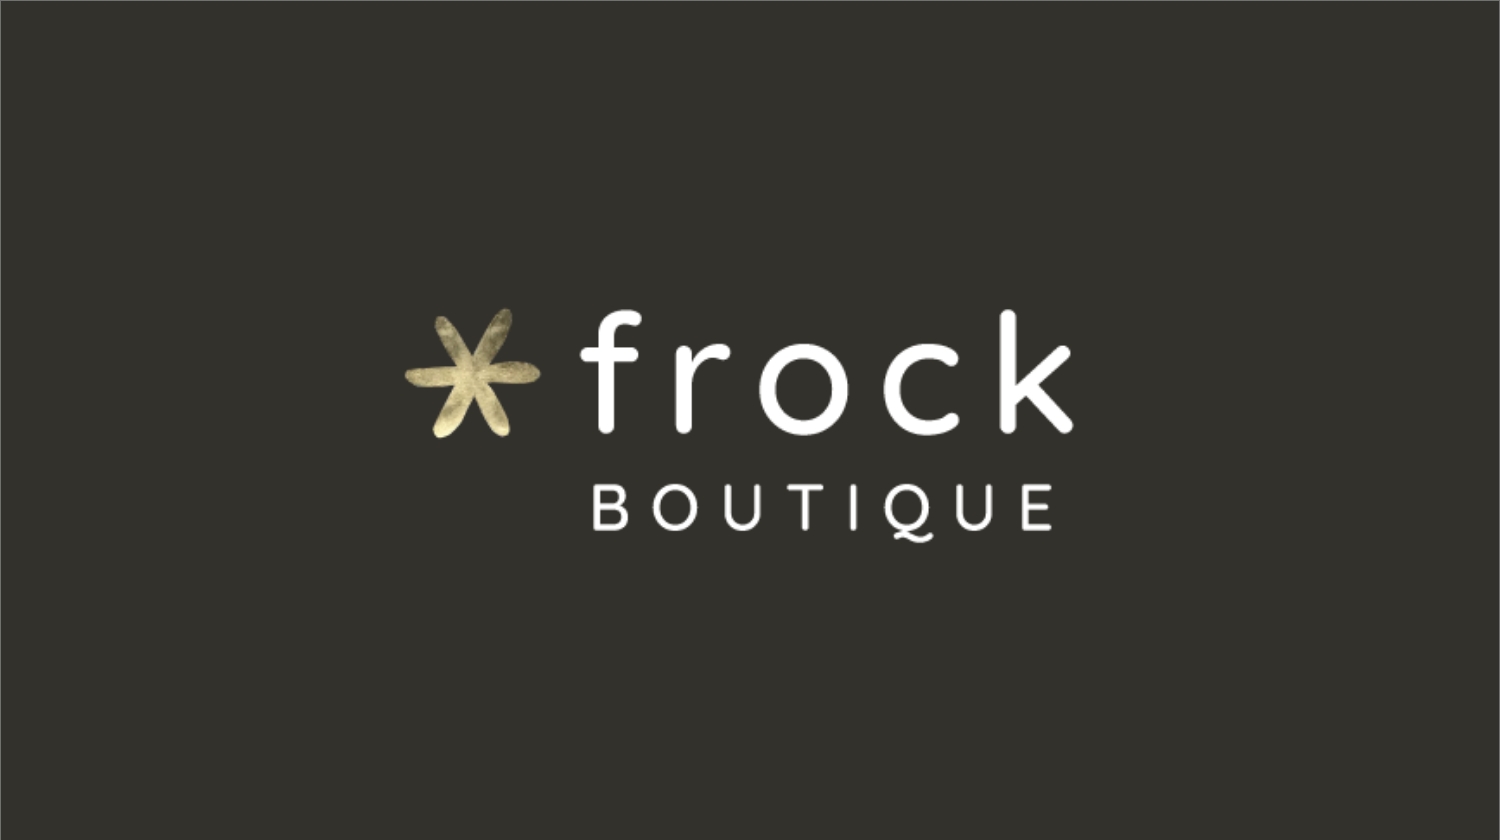 Frock Boutique Logo and Branding Asheville Design